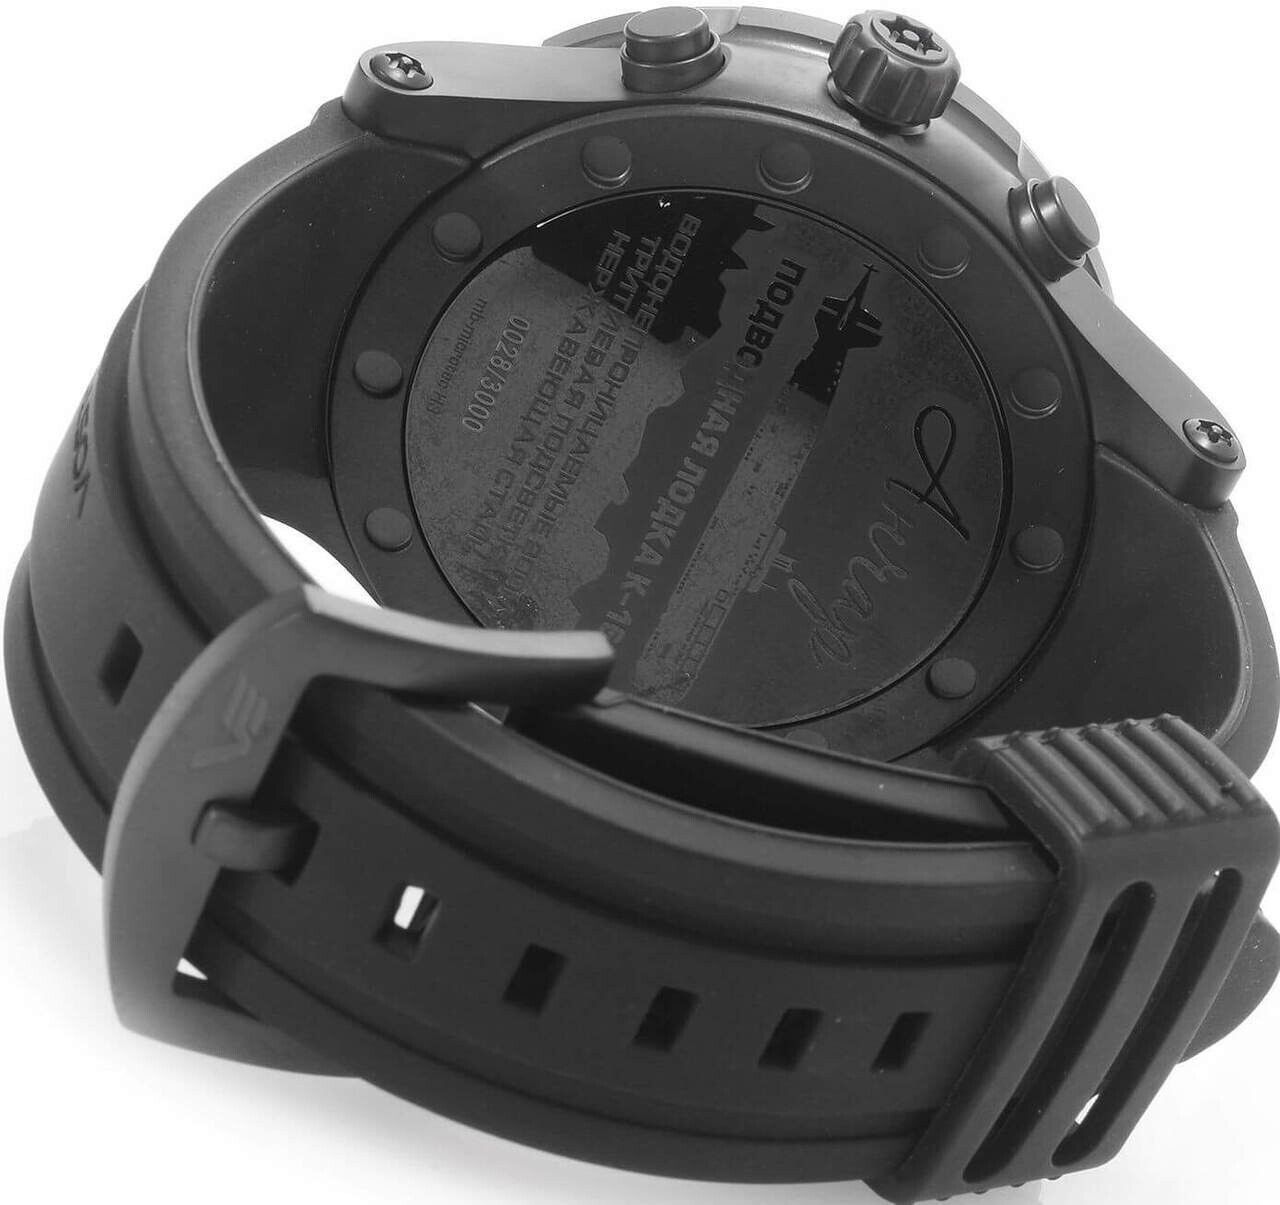 Vostok-Europe Anchar Diver Tritium Green Dial Men's Quartz Watch 6S305104243